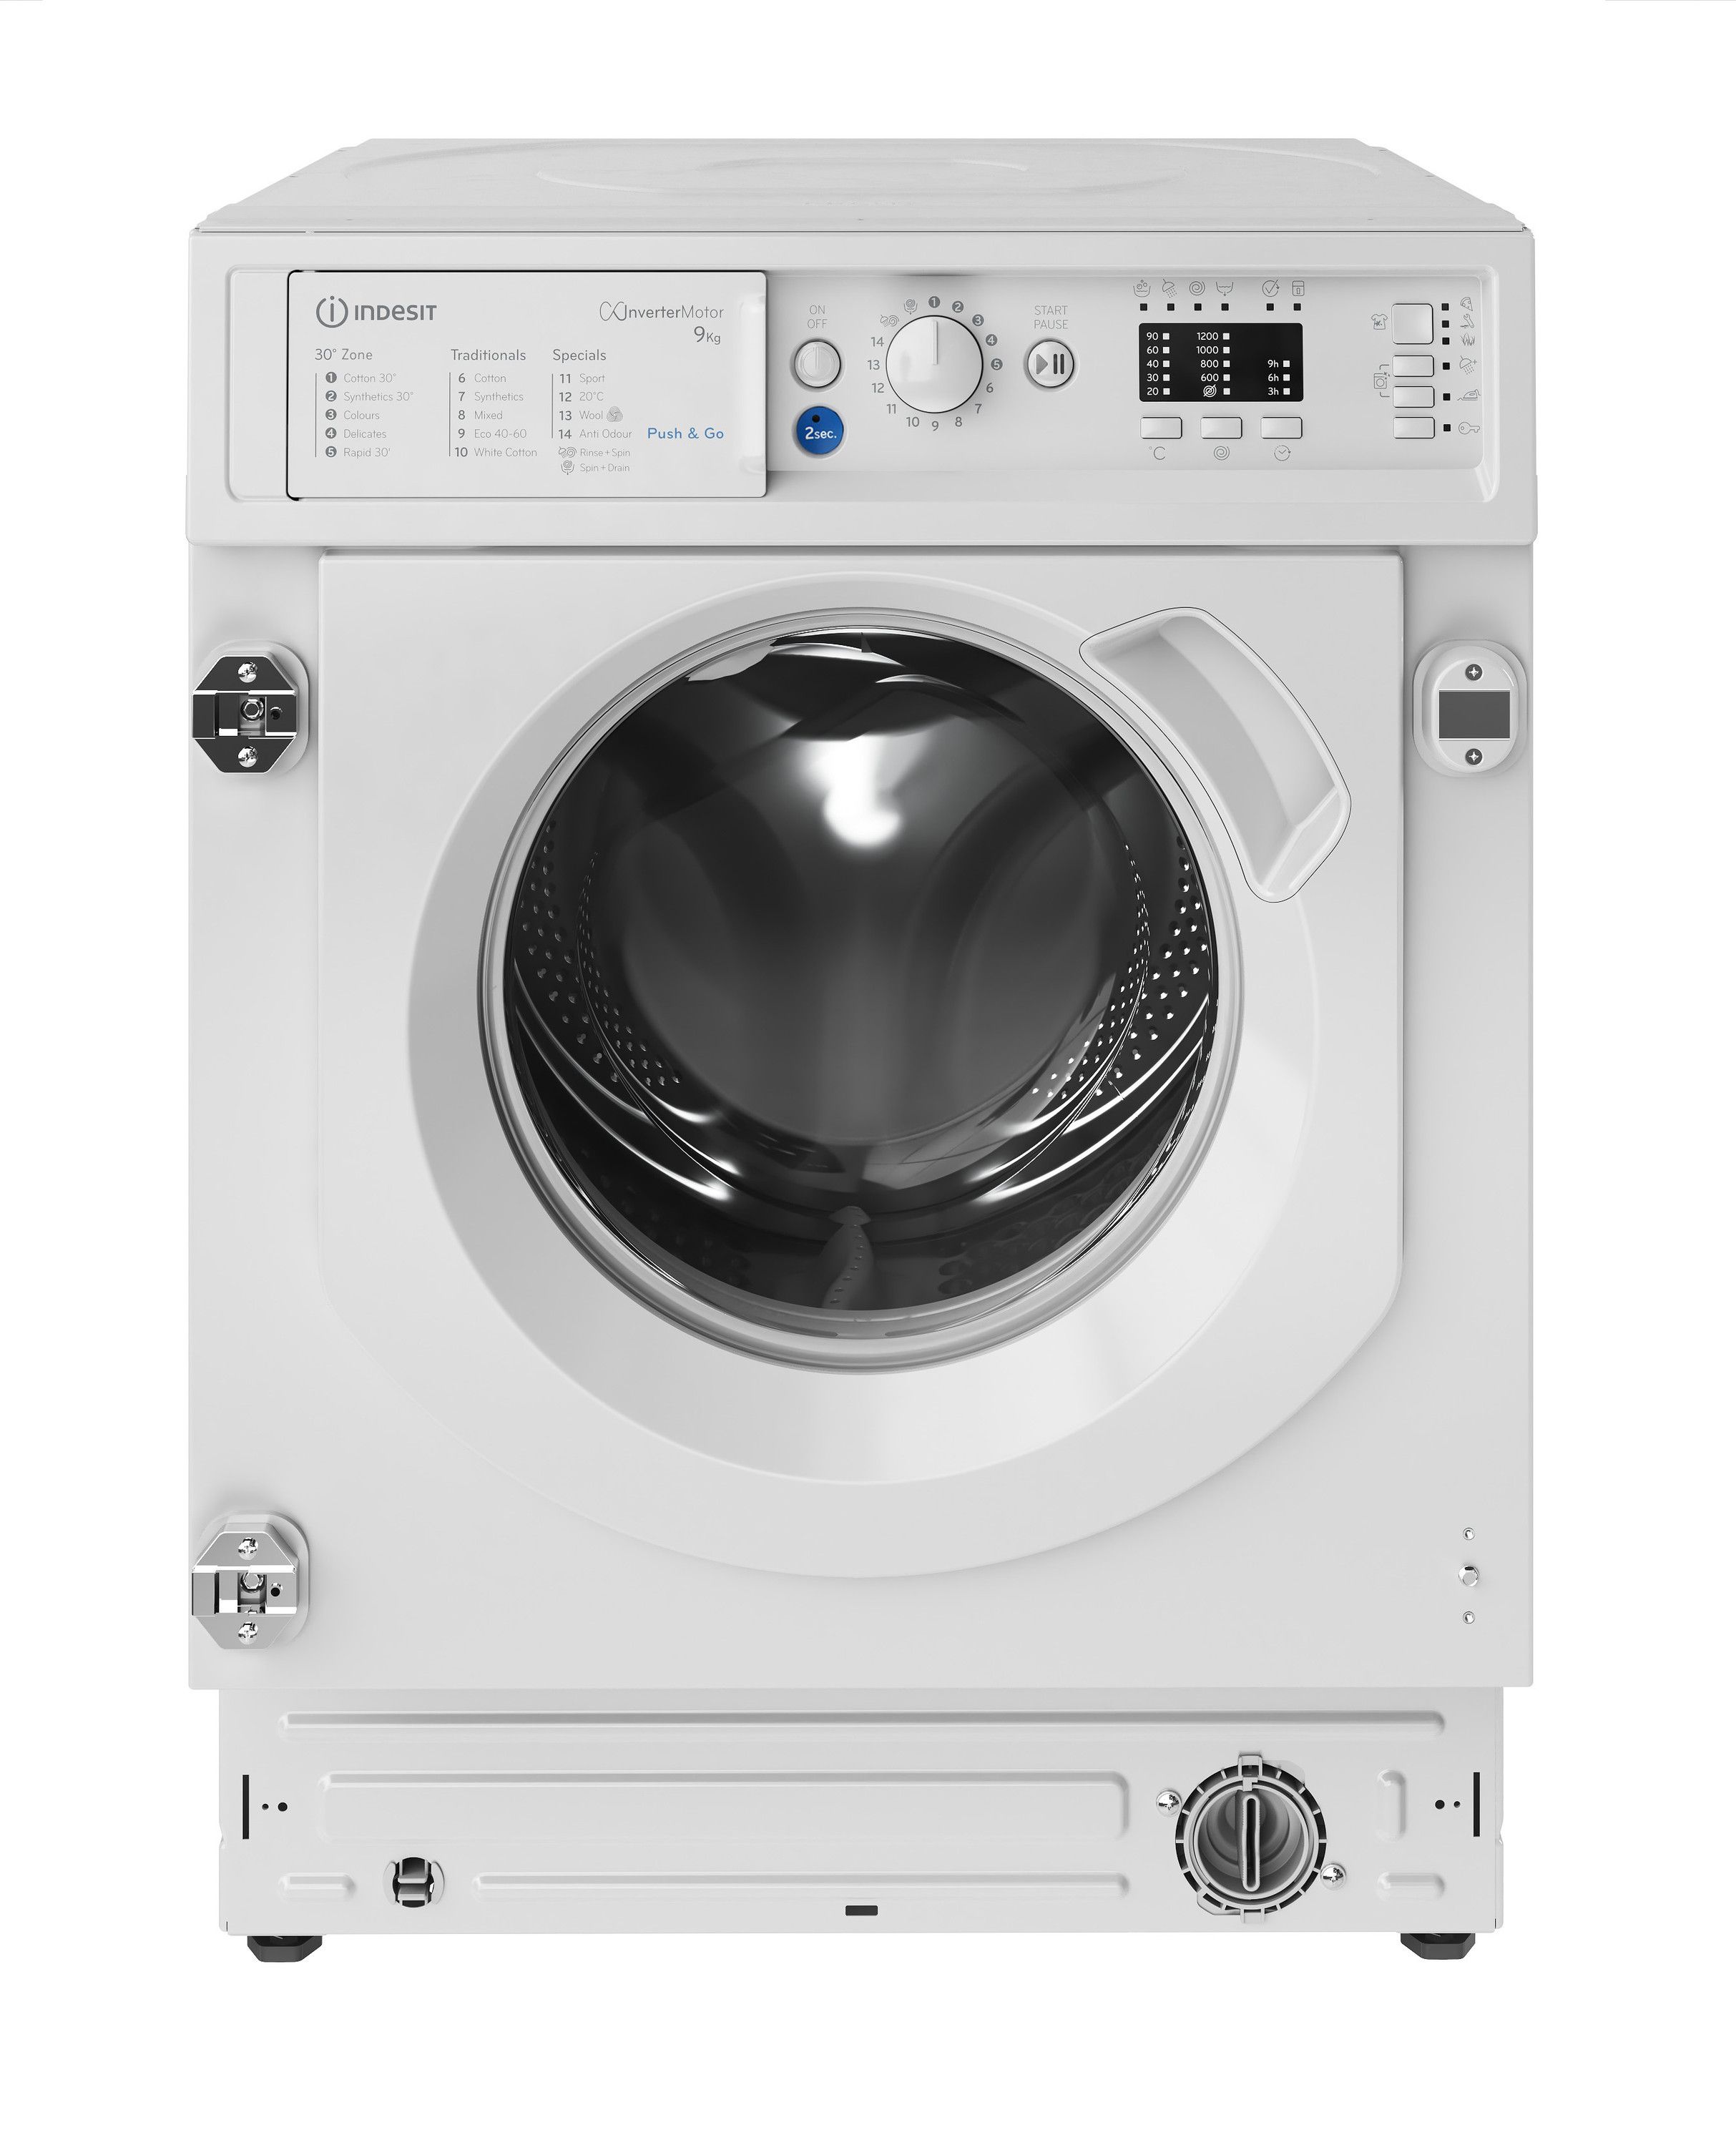 Indesit BIWMIL91485UK Integrated 9kg Washing Machine with 1400 rpm - White - B Rated, White